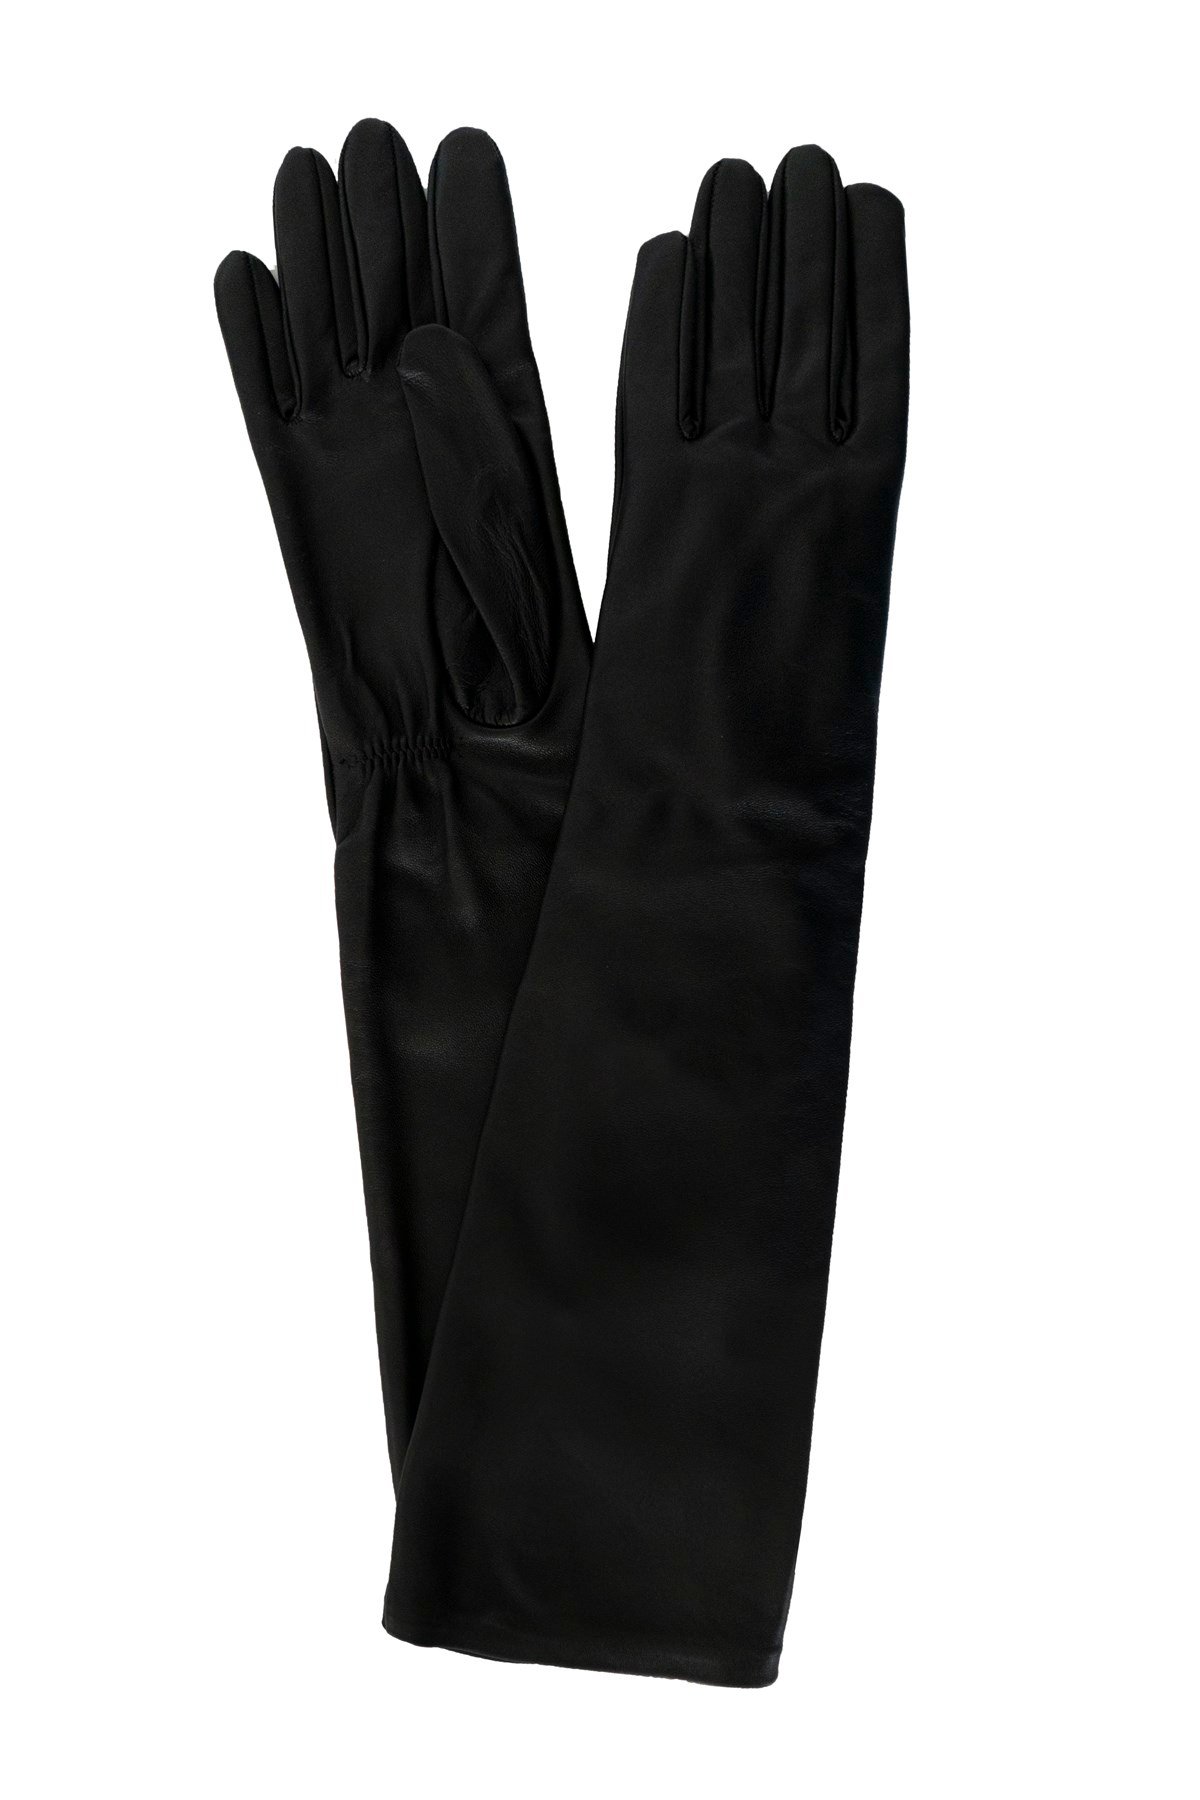 Long Sleeve Leather Black Glove Black Noble | Luxury Shearling